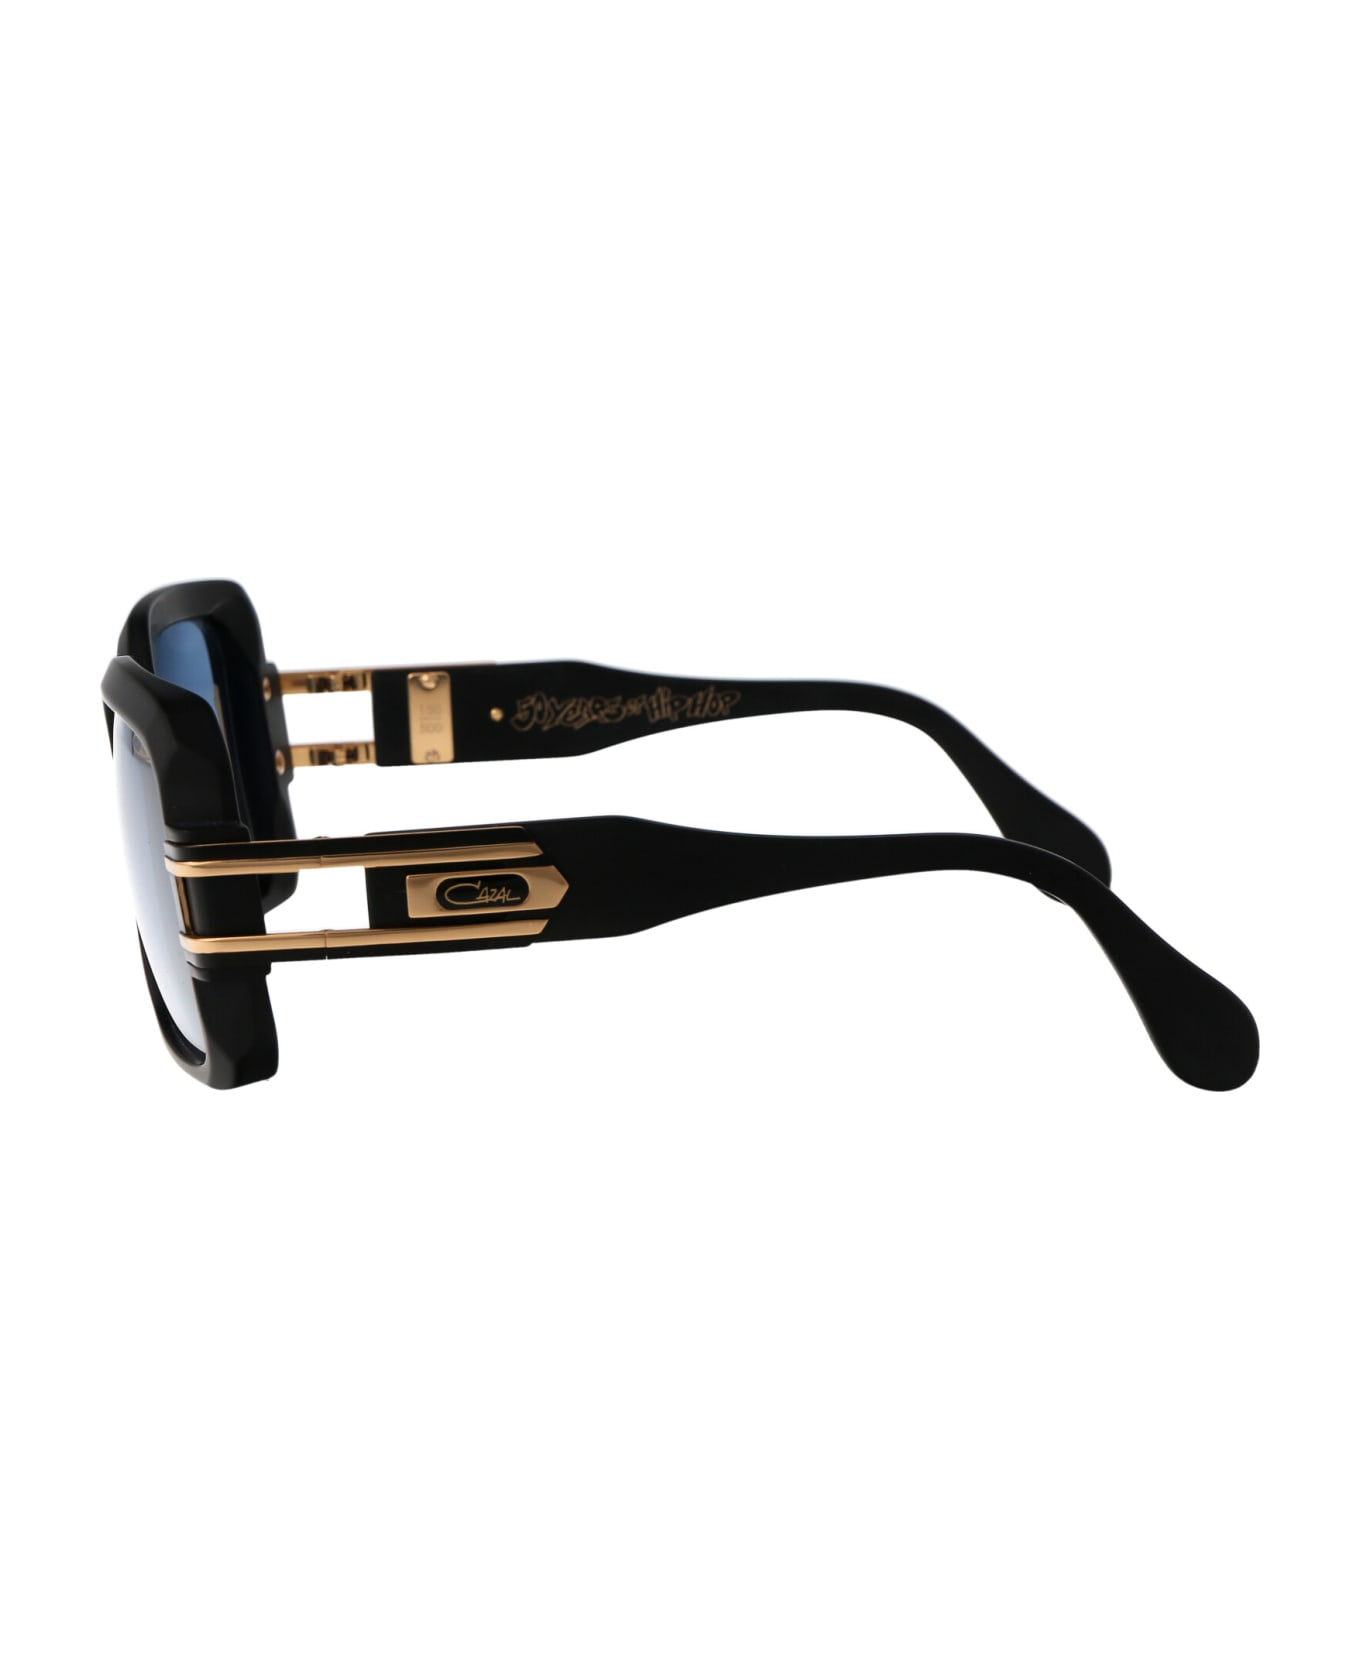 Cazal Mod. 623/3 Sunglasses Noten - 050 BLACK